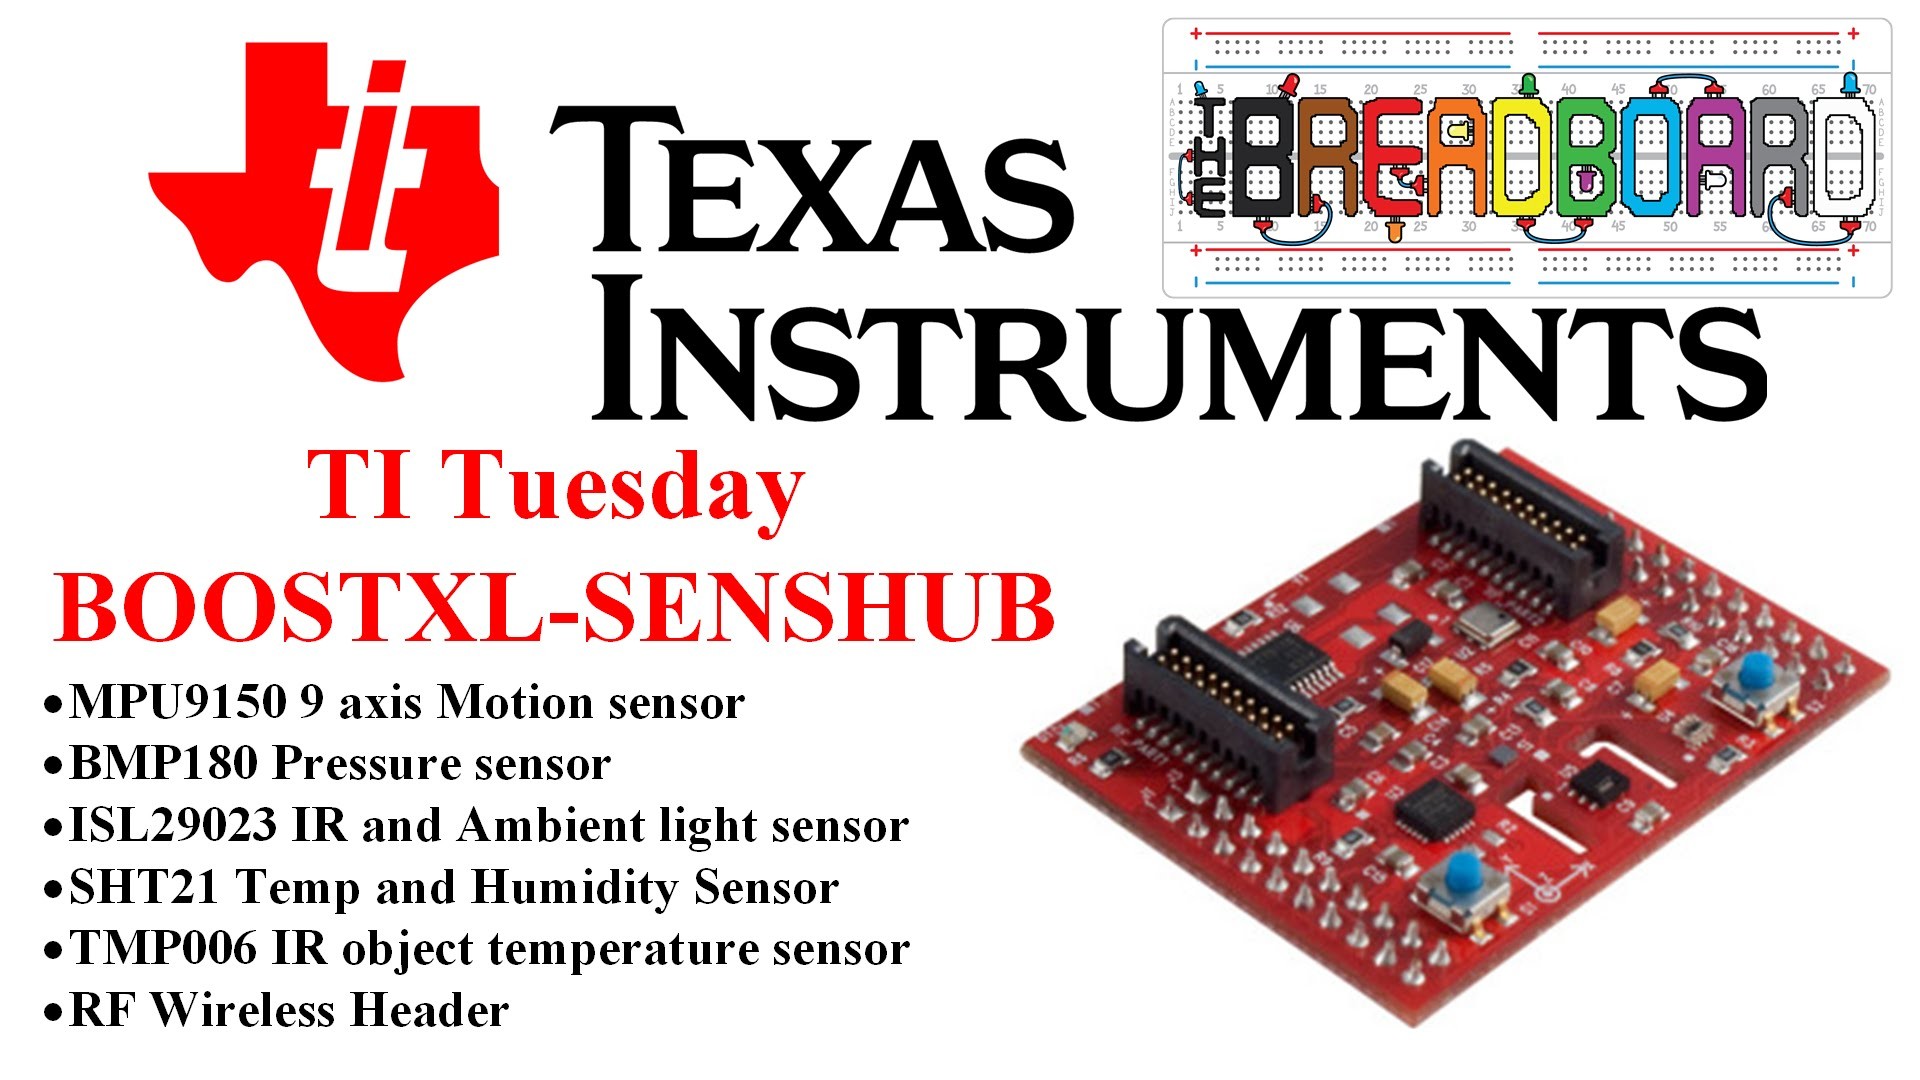 1920x1080 TI Tuesday - BOOSTXL SENSHUB - Sensors Galore